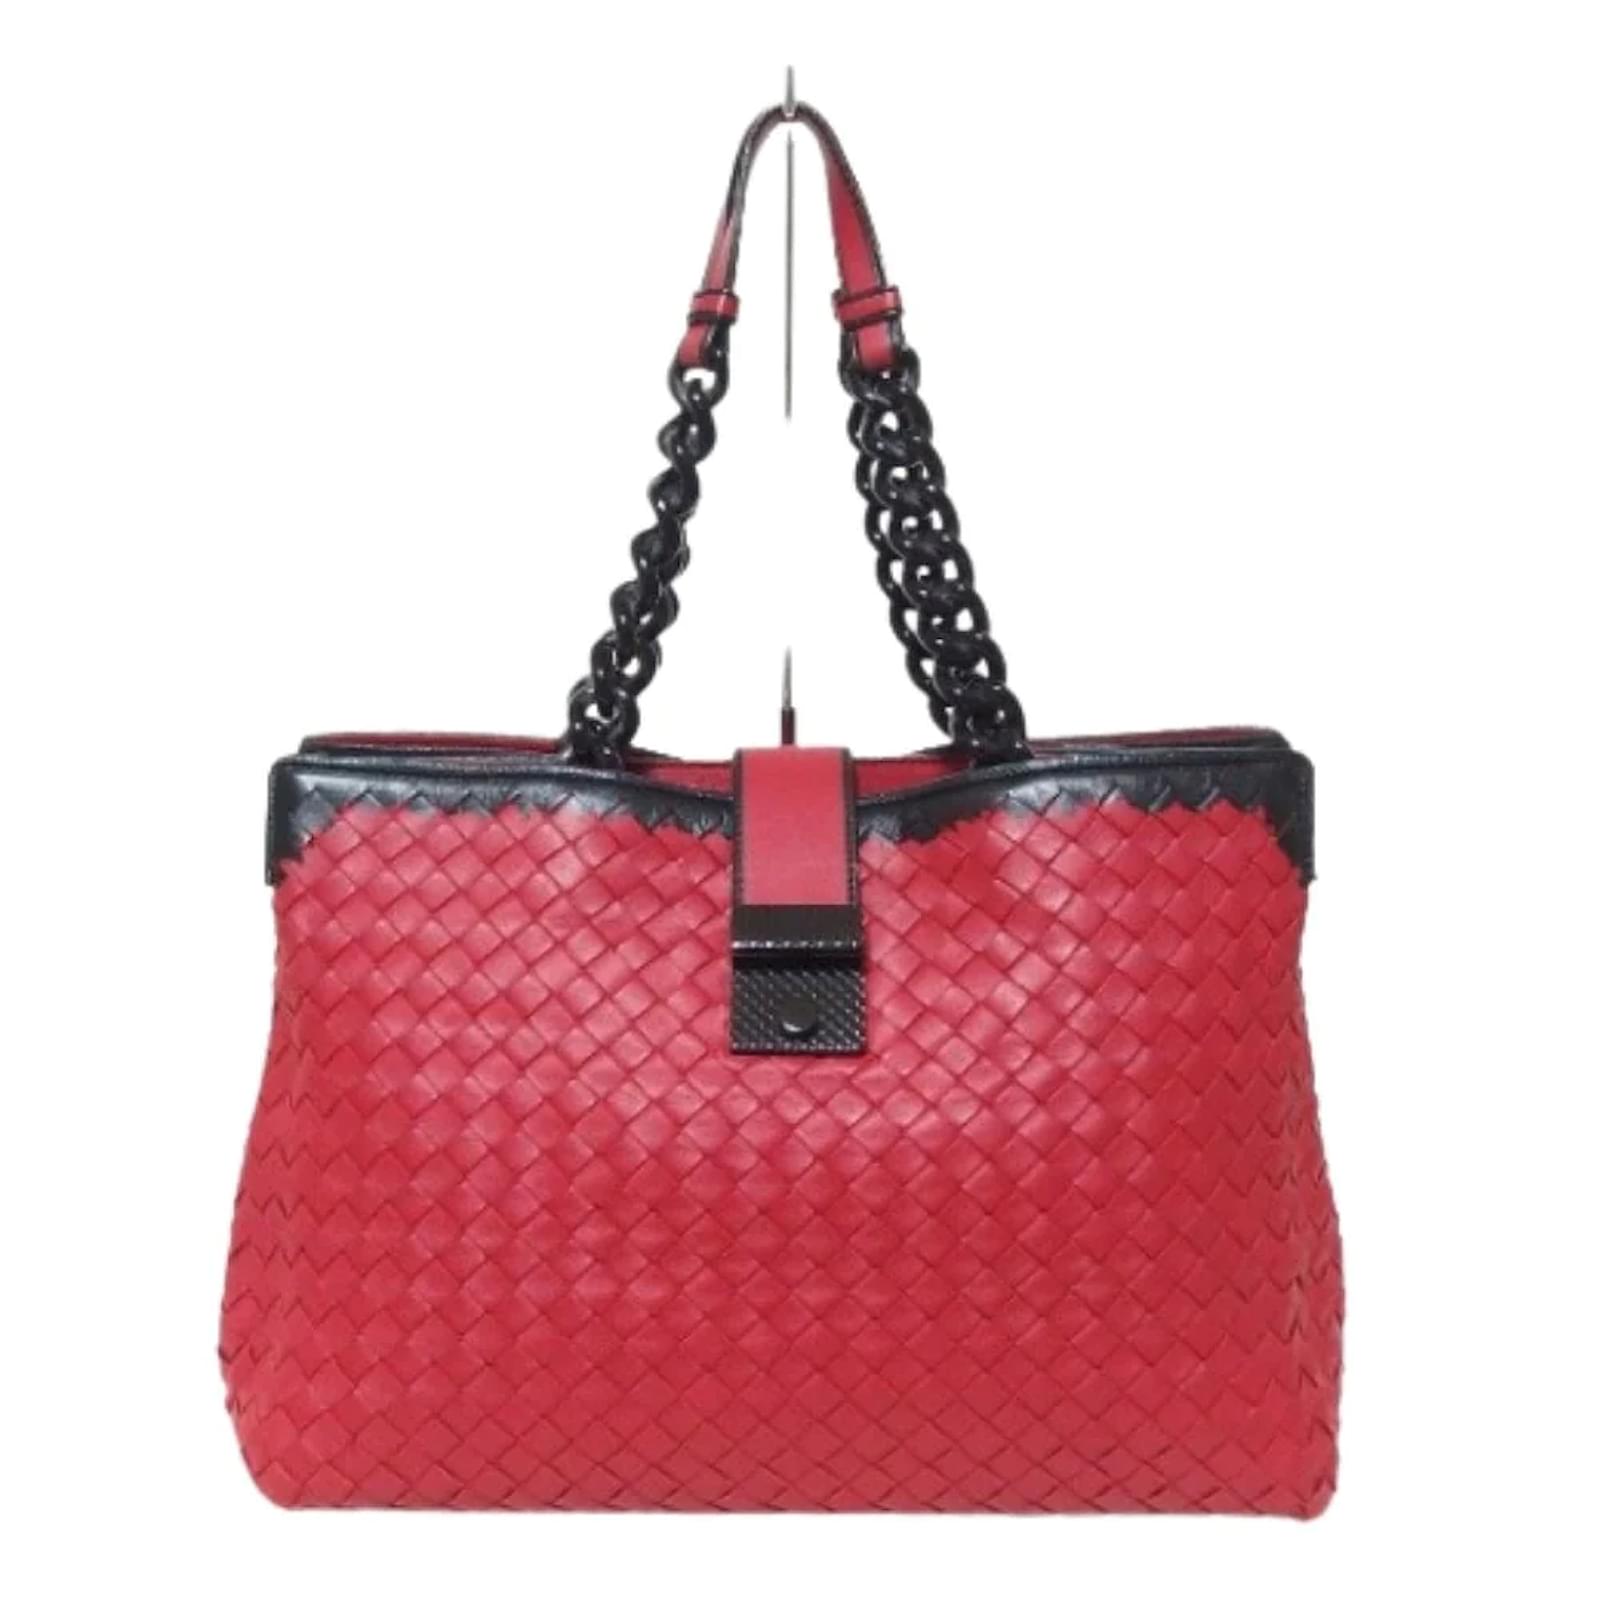 Bottega Veneta Intrecciato Leather Tote Bag Red Pony-style